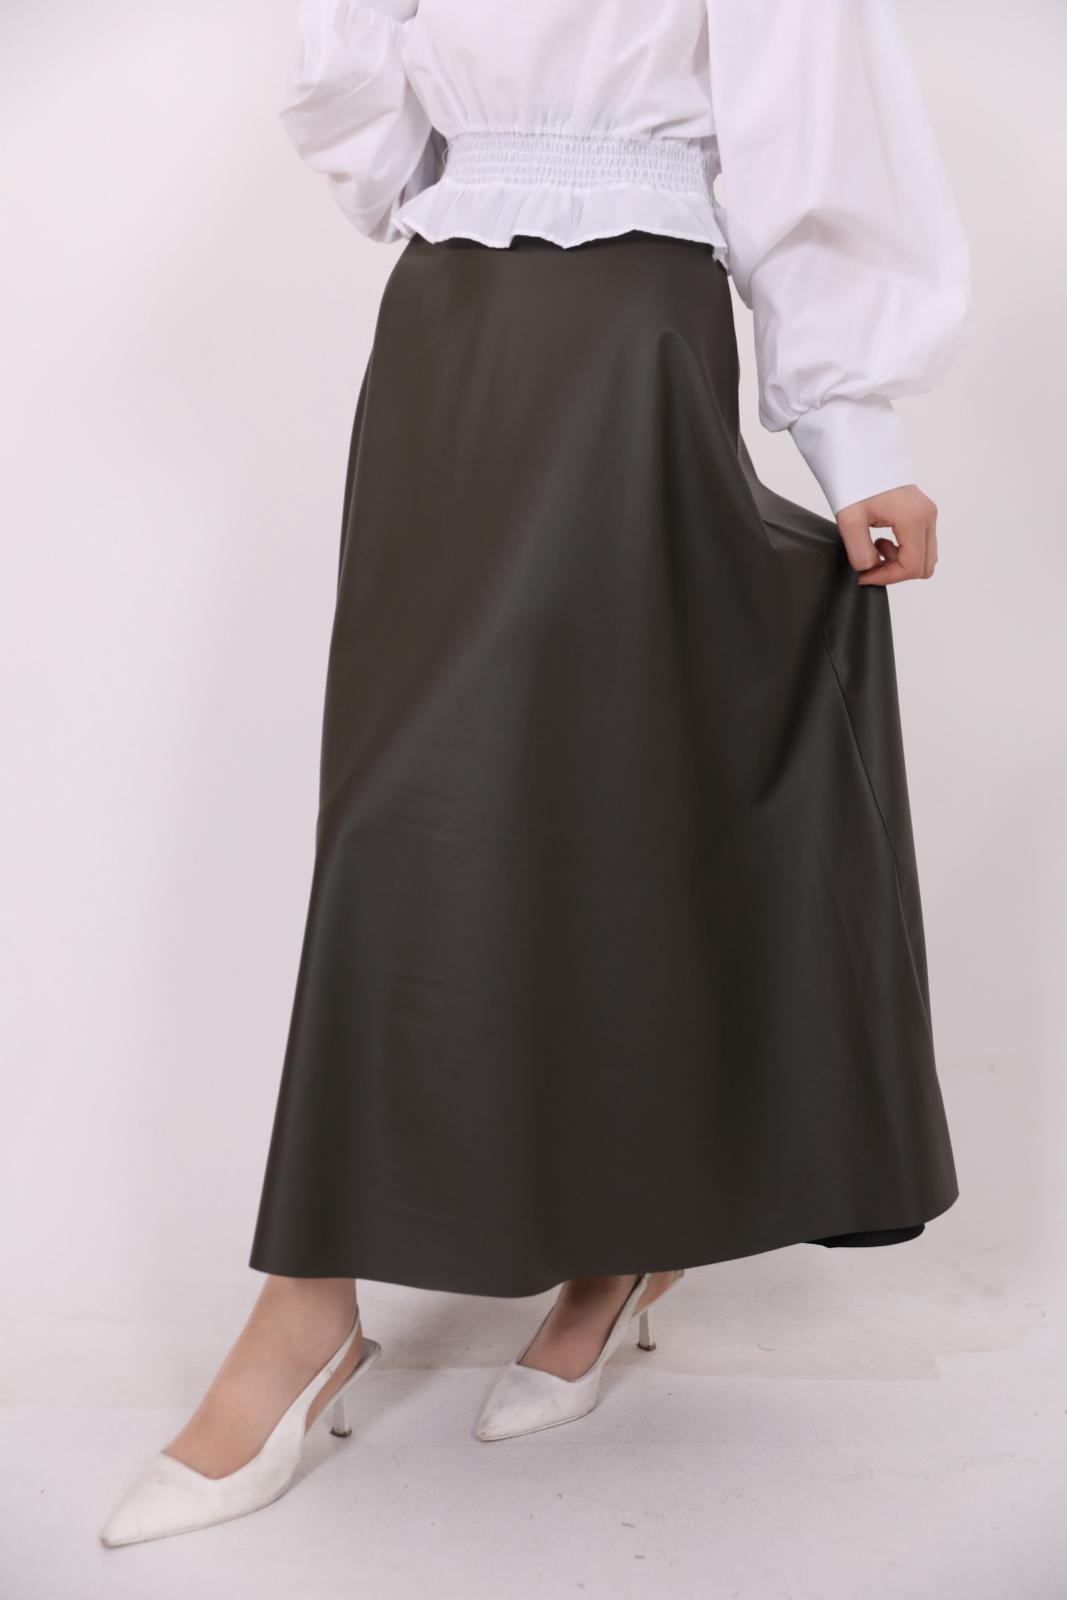 Kiloş Leather Skirt Green